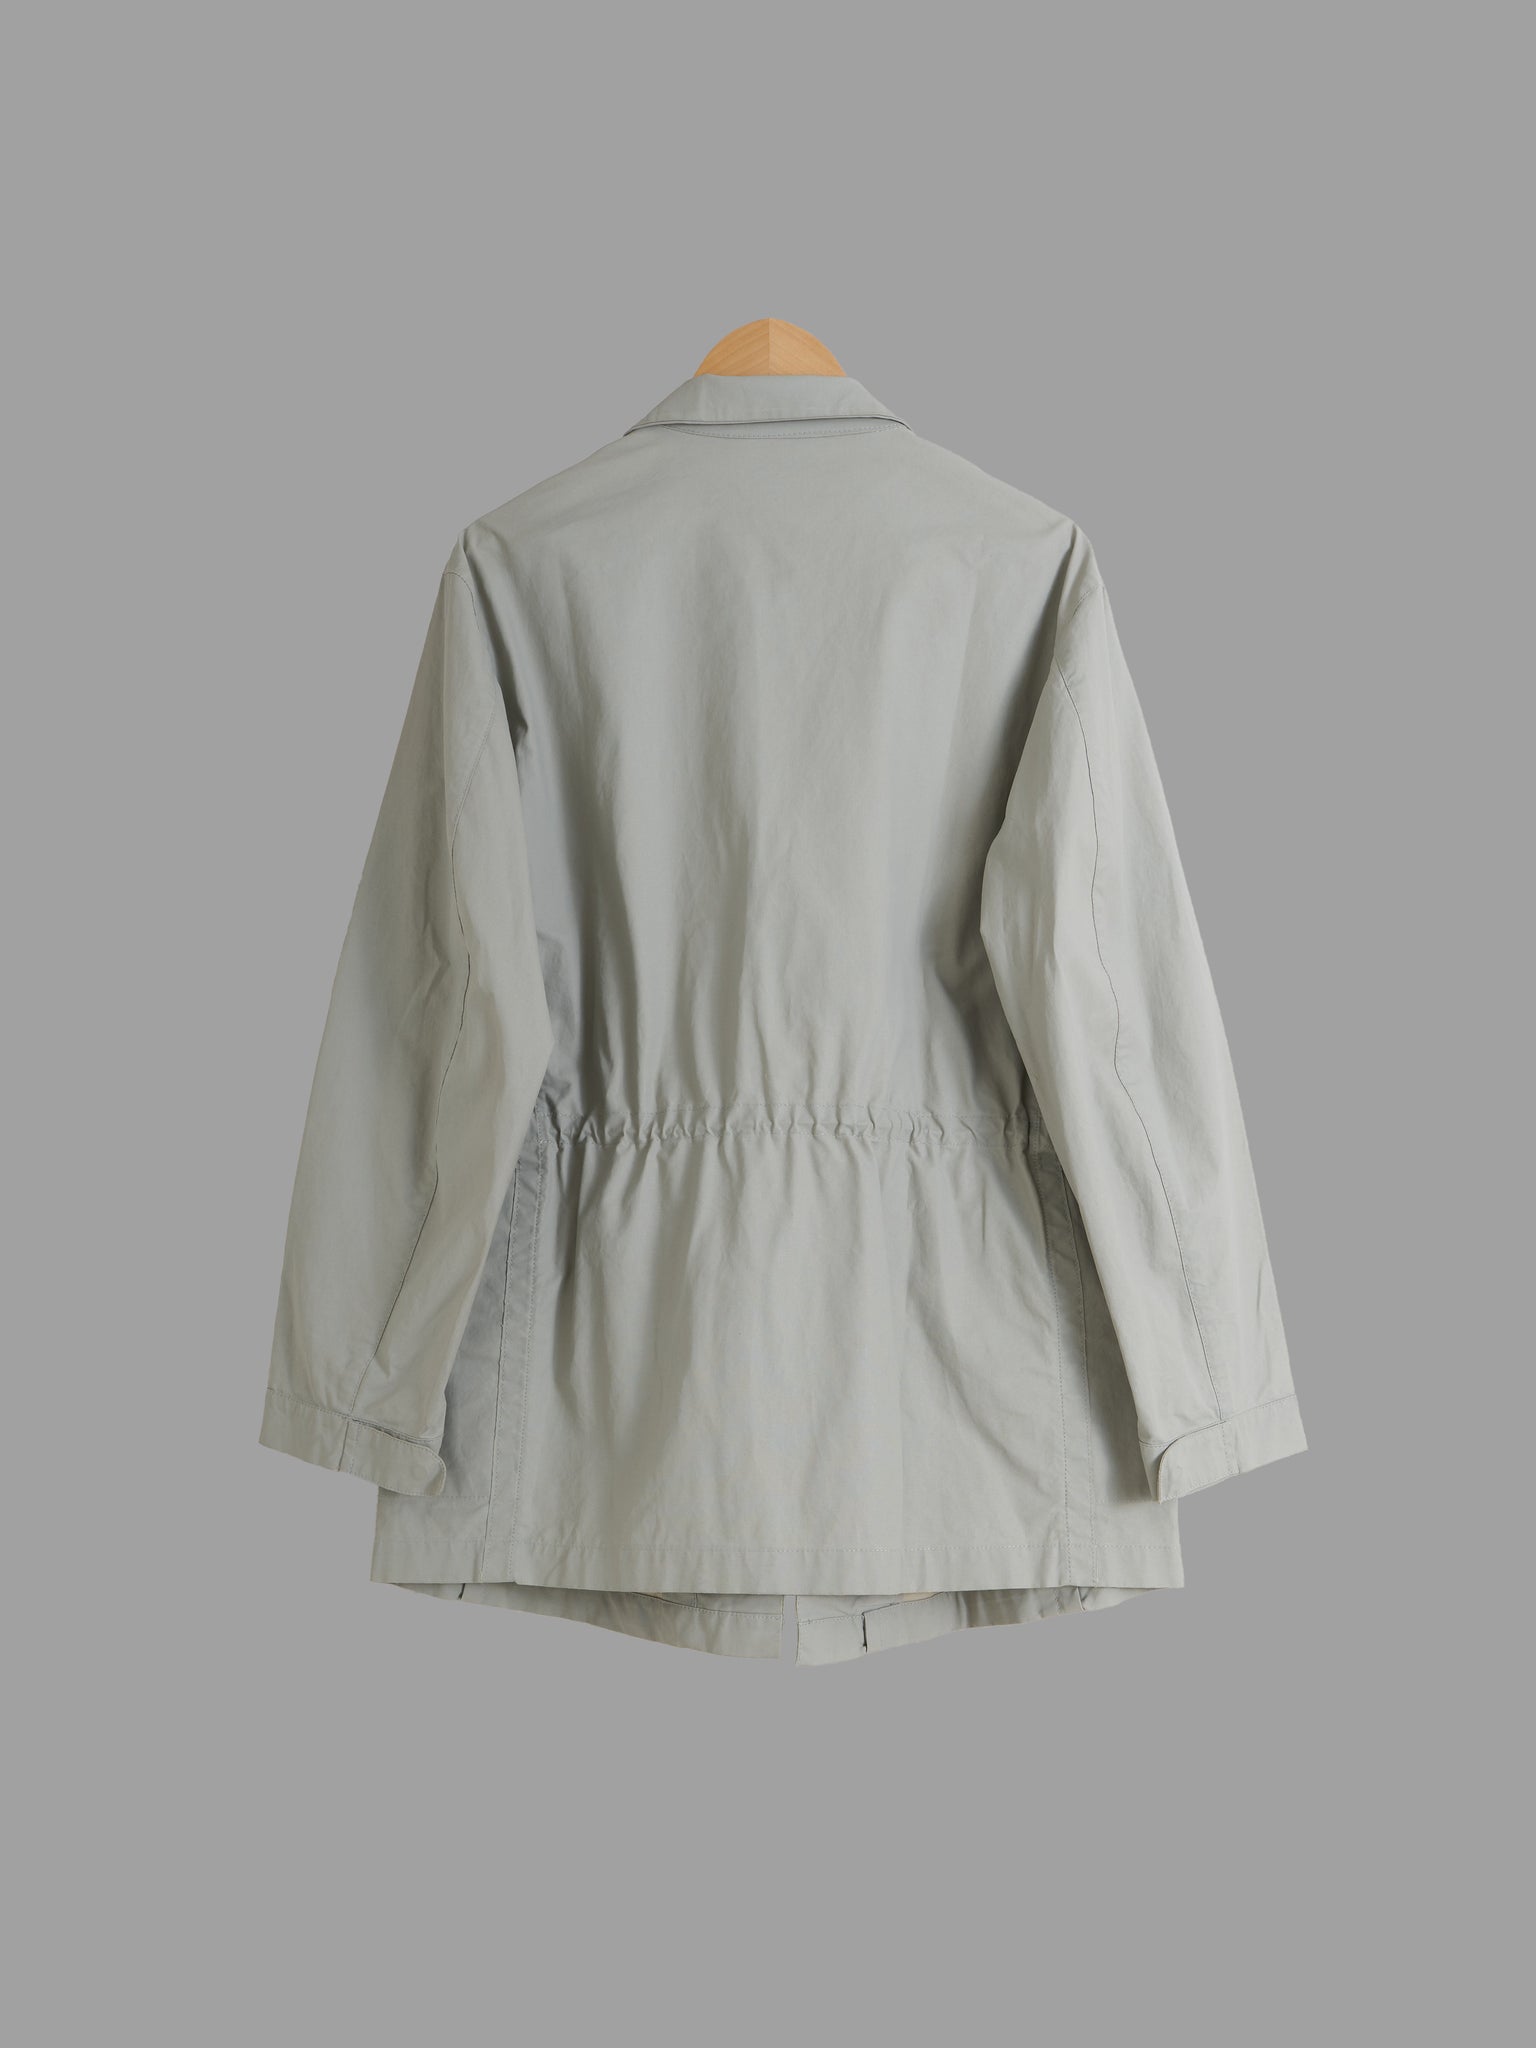 Mandarina Duck 1990s khaki grey drawstring waist stand collar jacket - mens 48